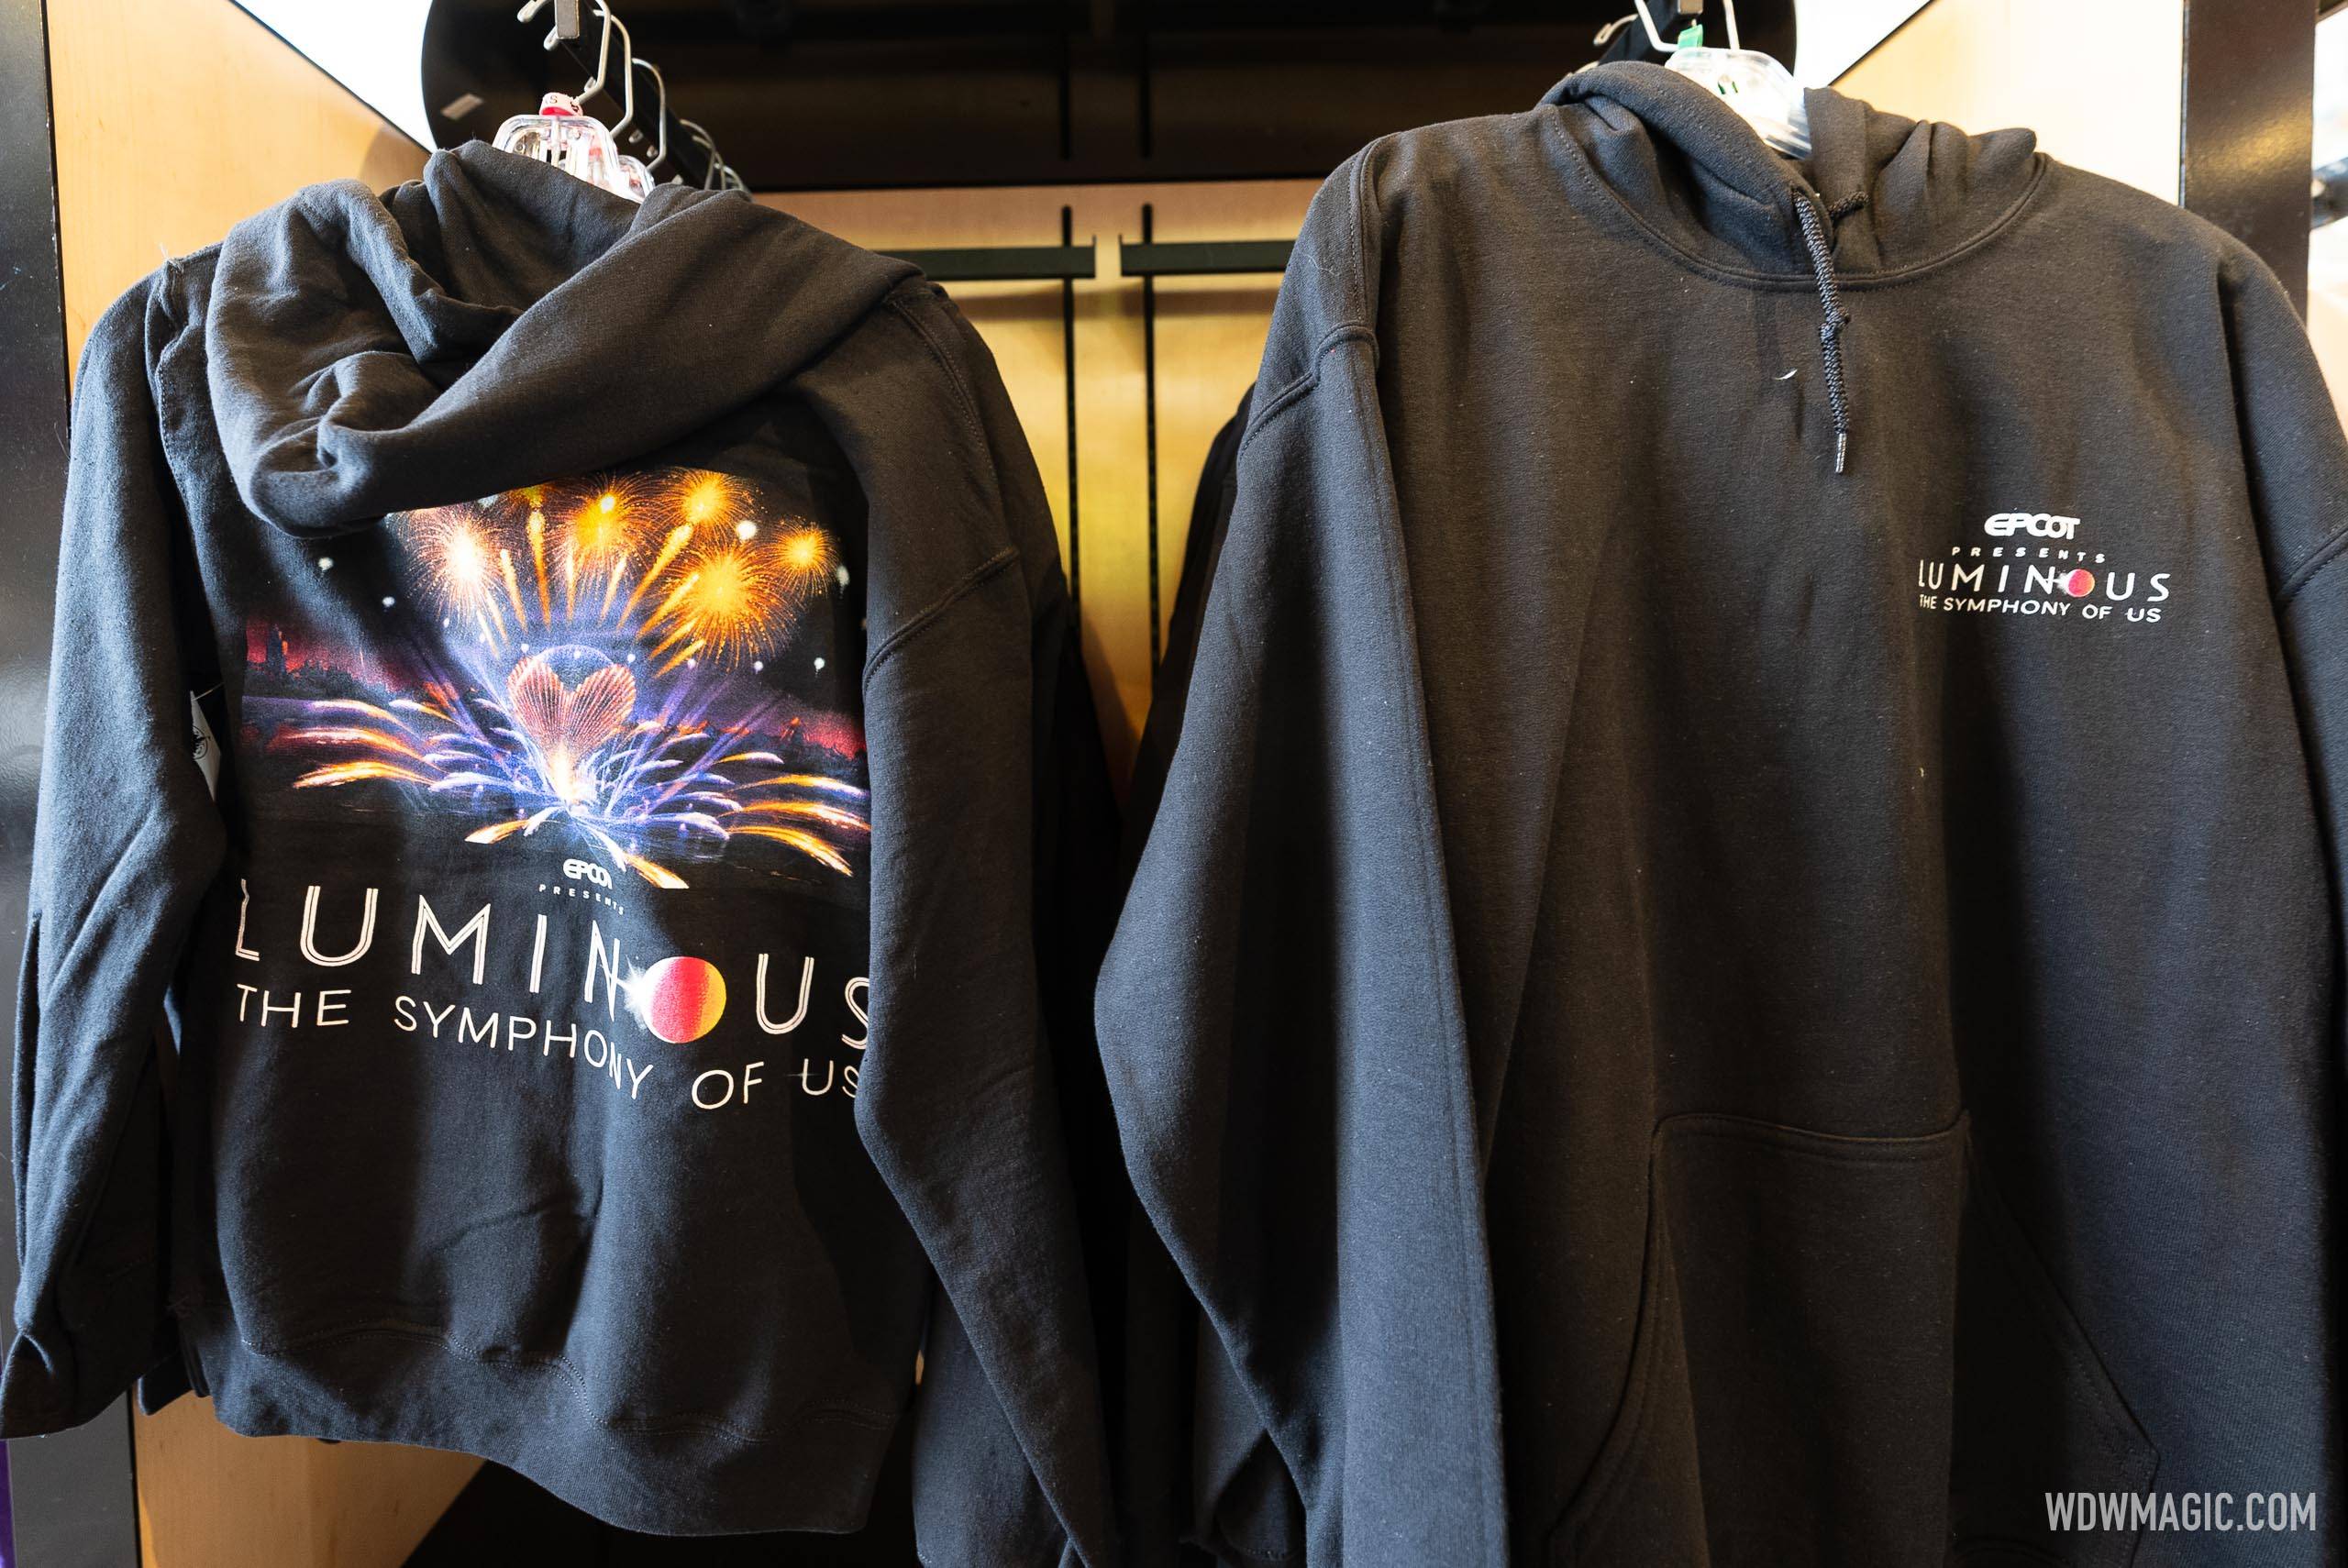 Luminous the Symphony of Us merchandise